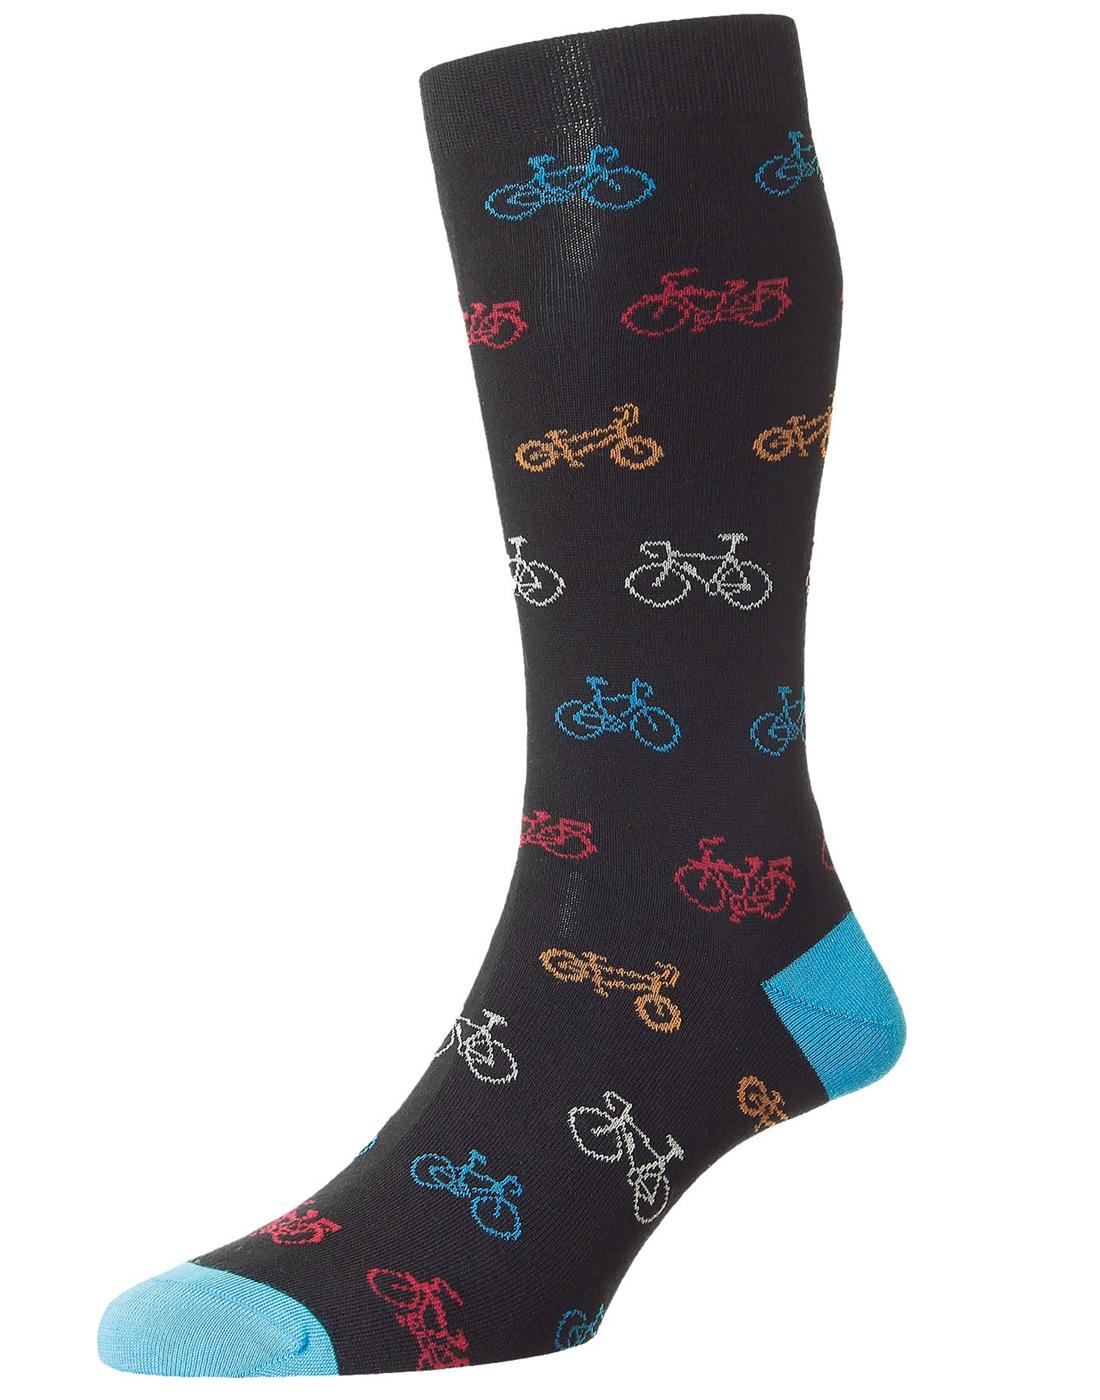 + Tissington SCOTT-NICHOL Retro 70s Bicycle Socks